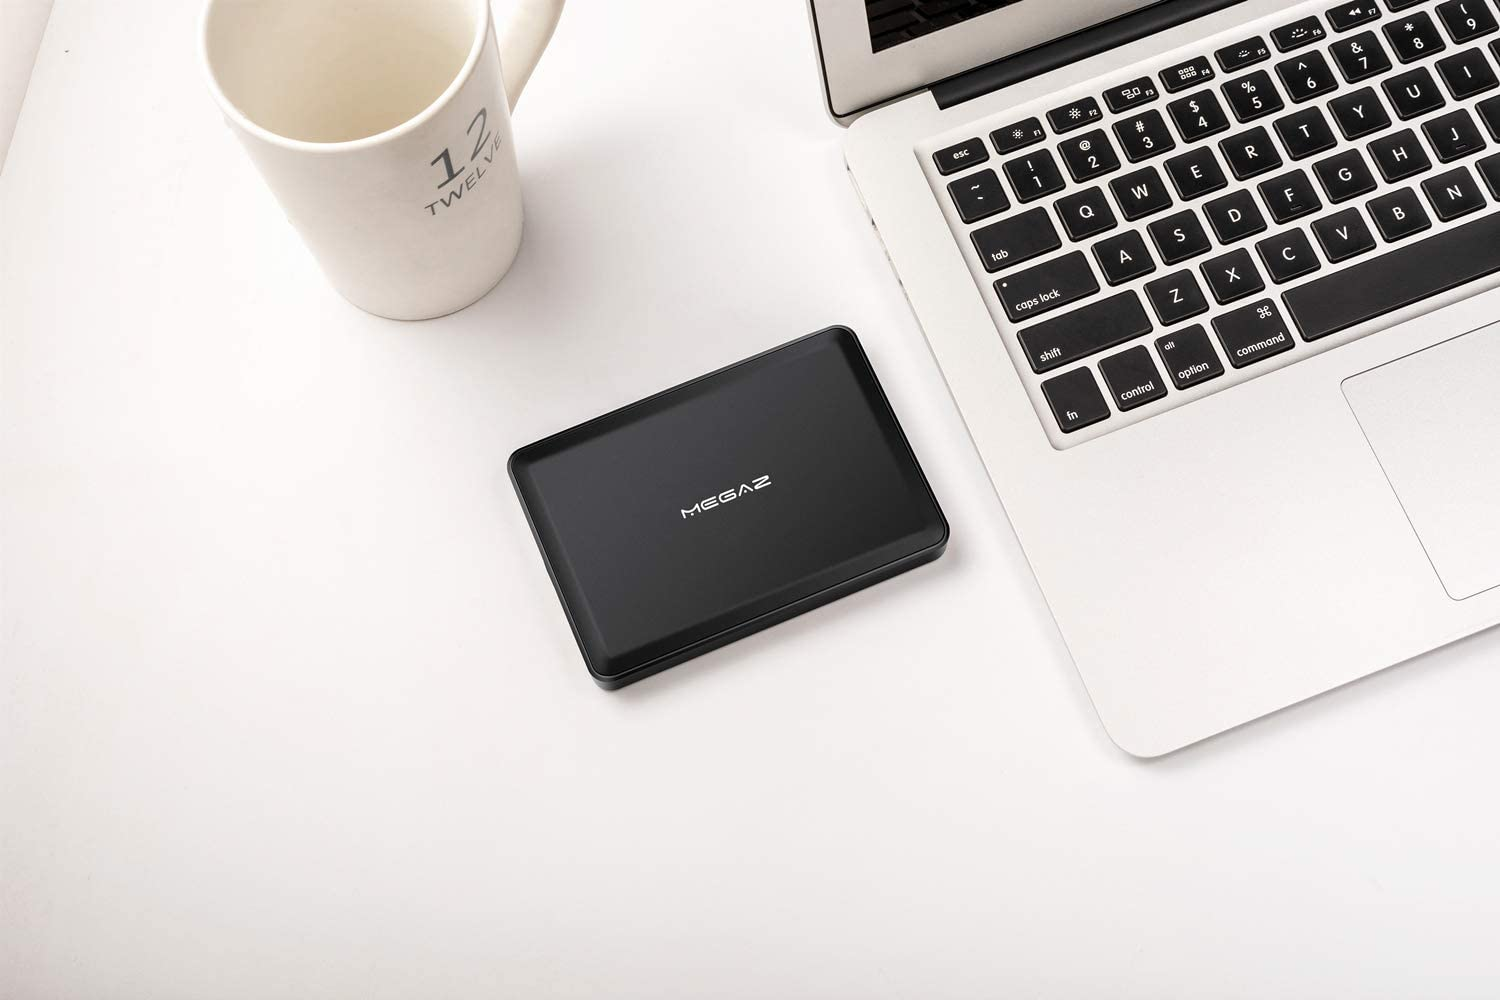 Megaz Backup Slim 2.5'' Portable HDD USB 3.0 for PC, Mac, Laptop, Chromebook - 3 Year Warranty